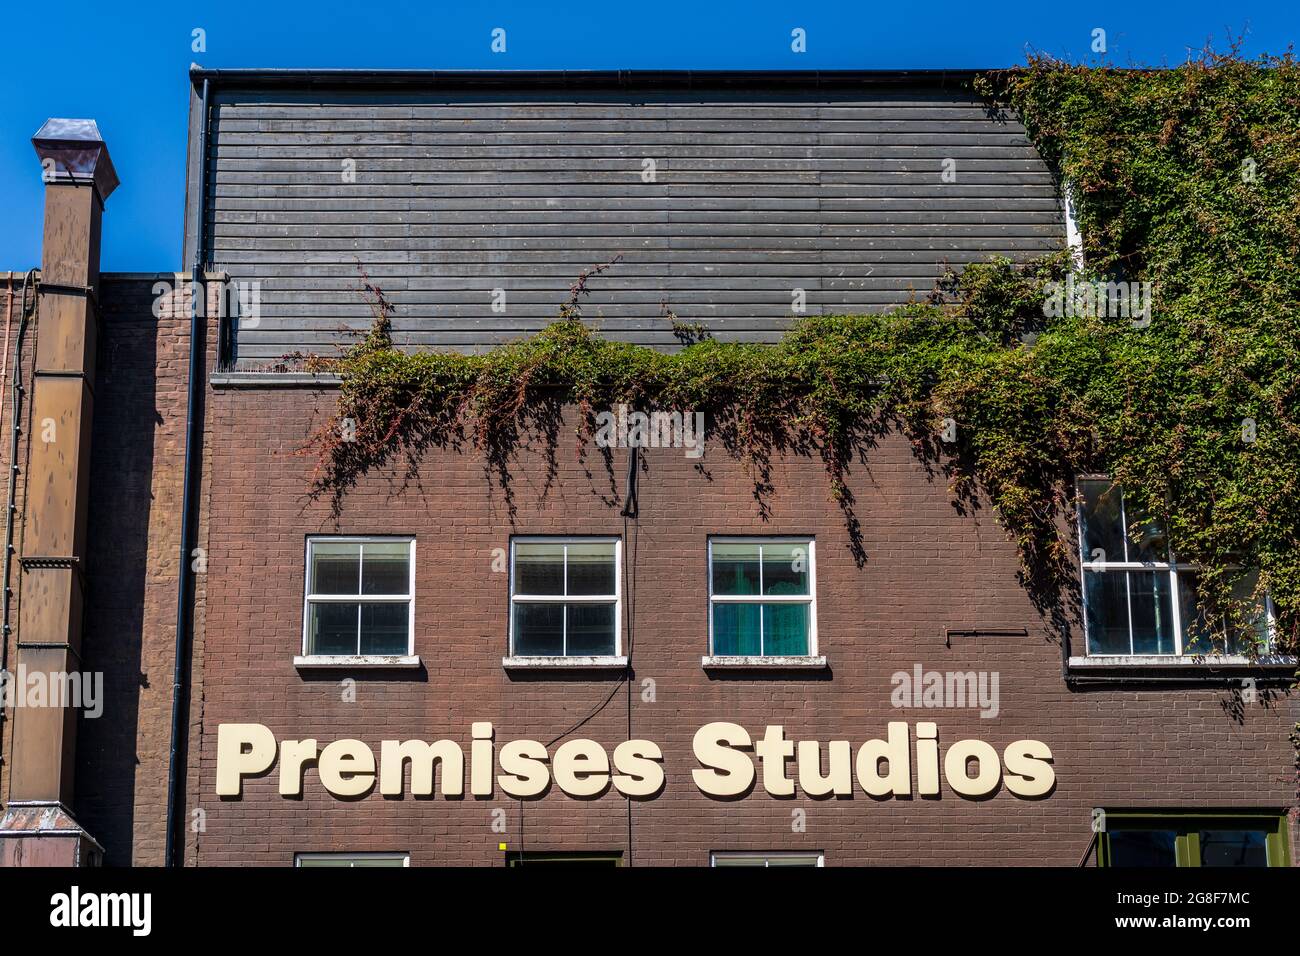 The Premises Studios Hackney London - the Premises Studios are commercial music studios based near Haggerston in Hackney, London. Founded 1986. Stock Photo